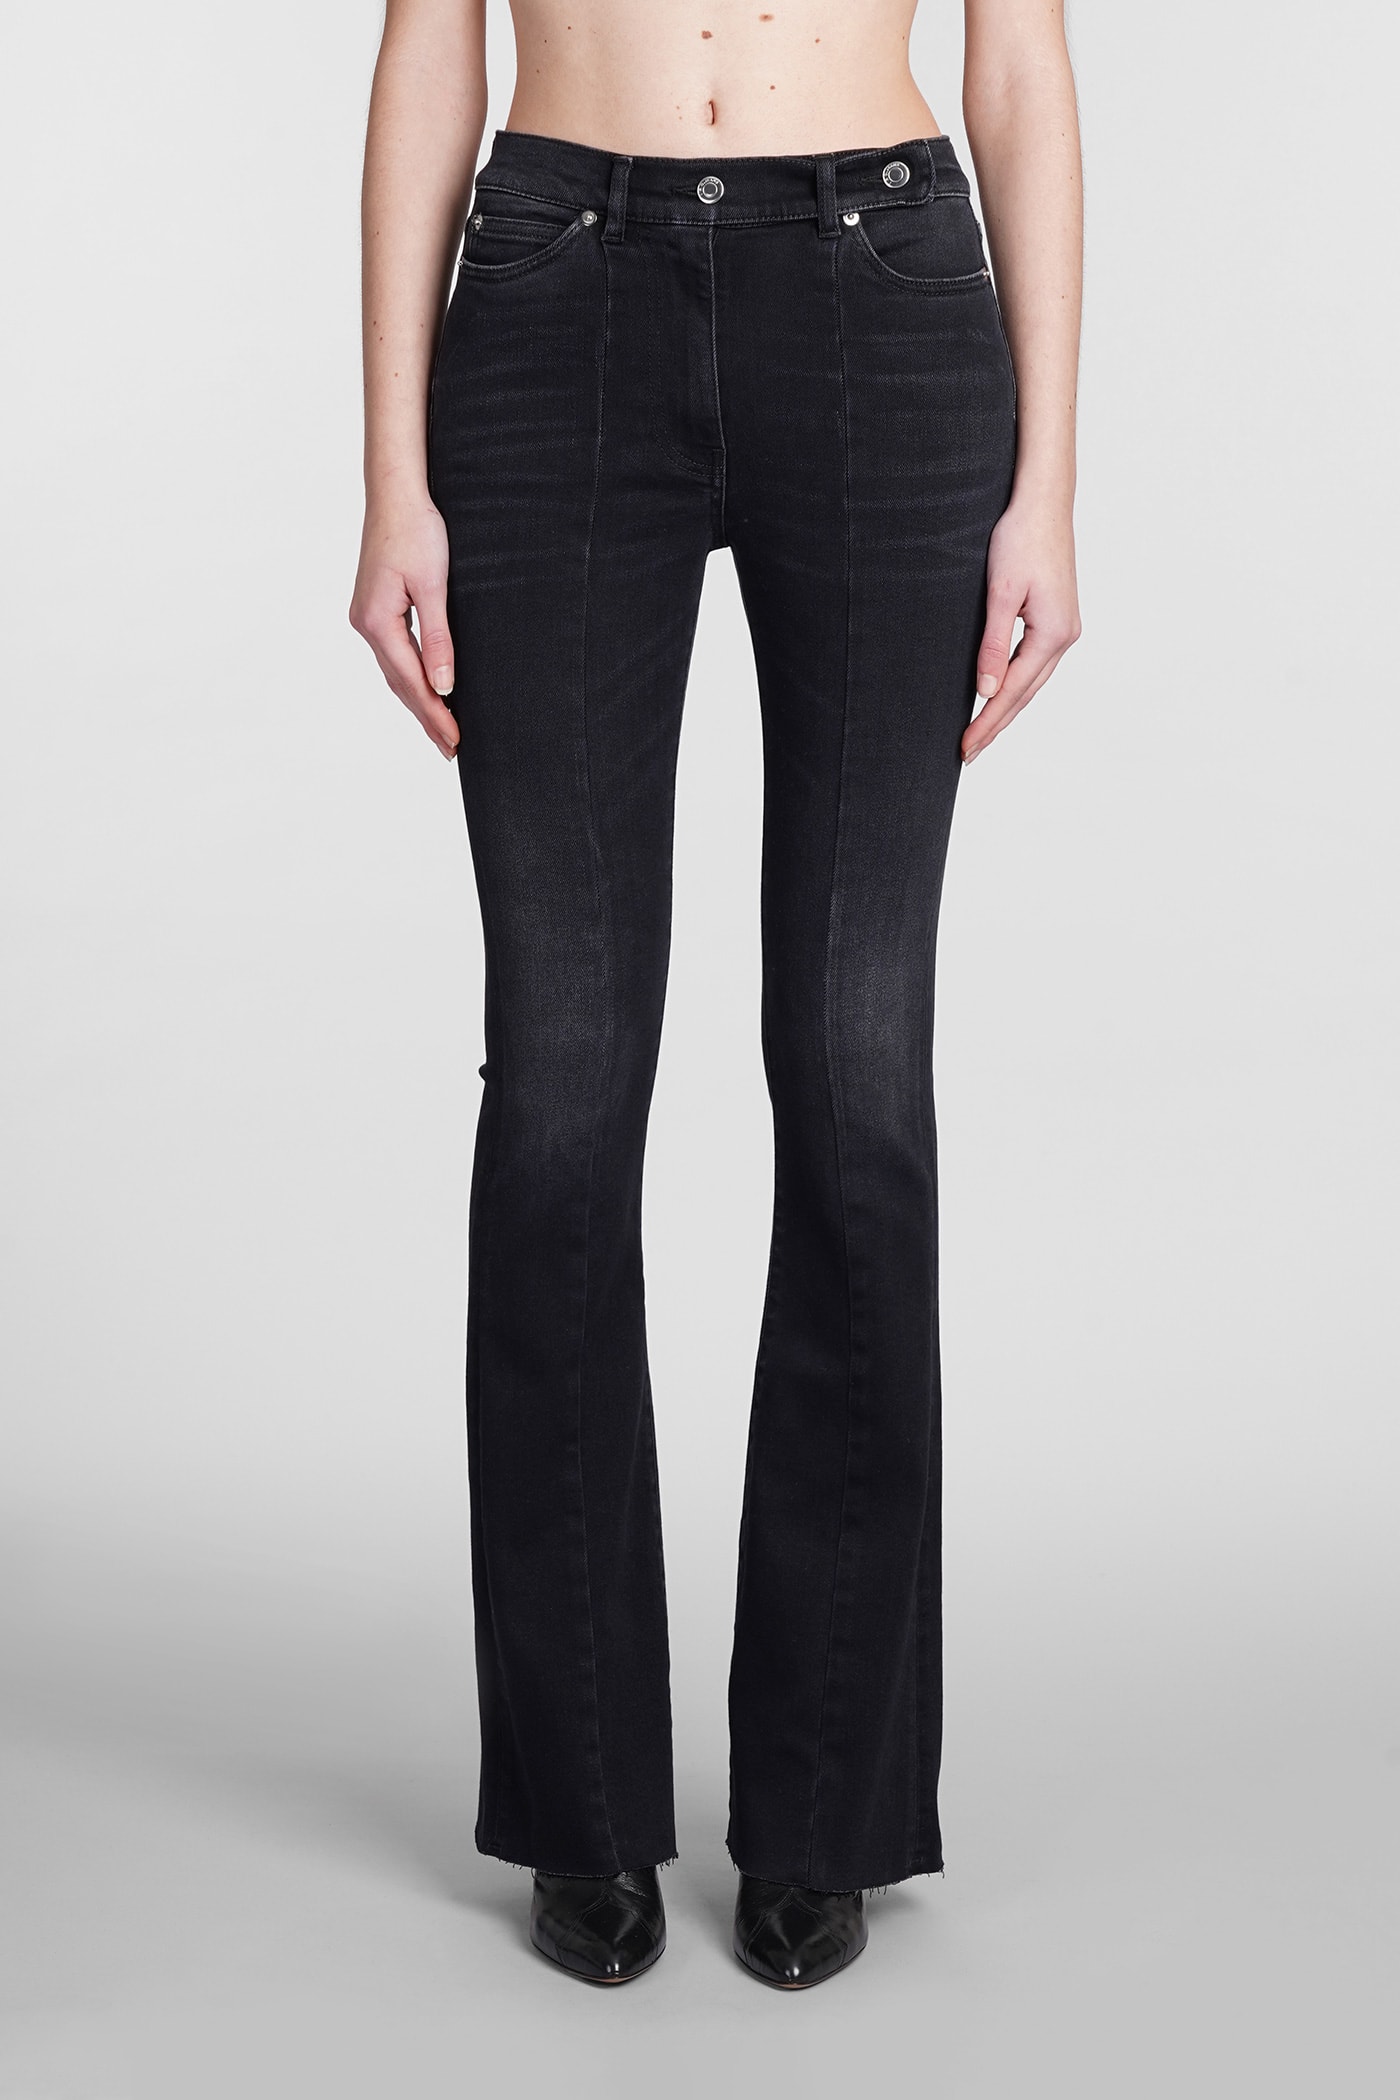 Zacca Jeans In Black Cotton